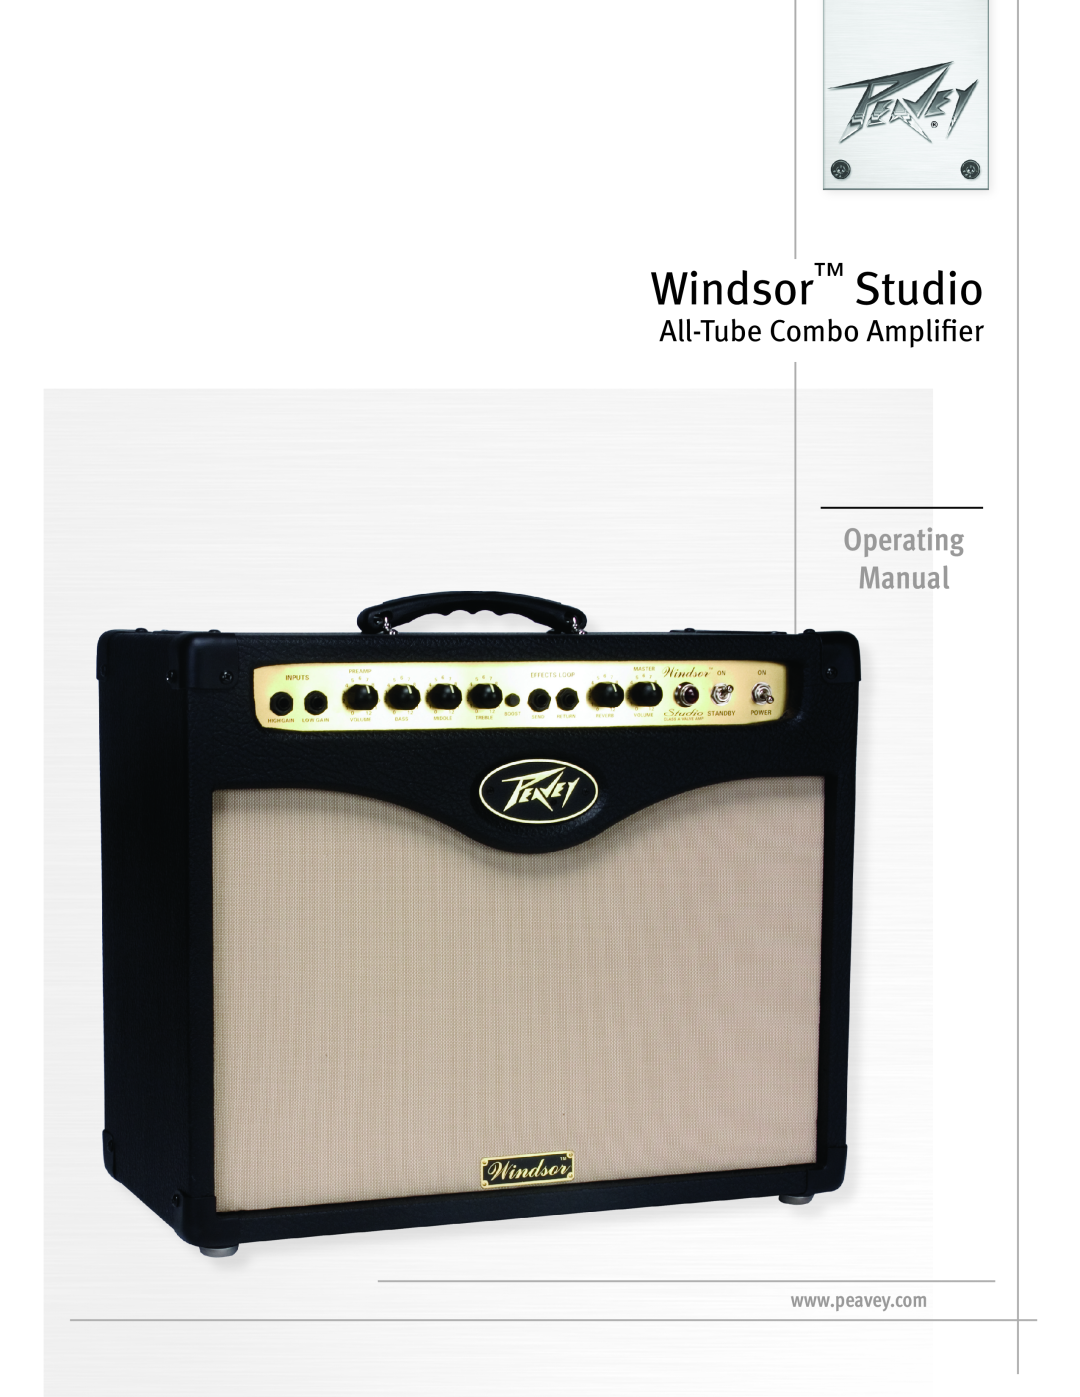 Peavey manual Windsor Studio, Operating Manual, All-TubeCombo Amplifier 